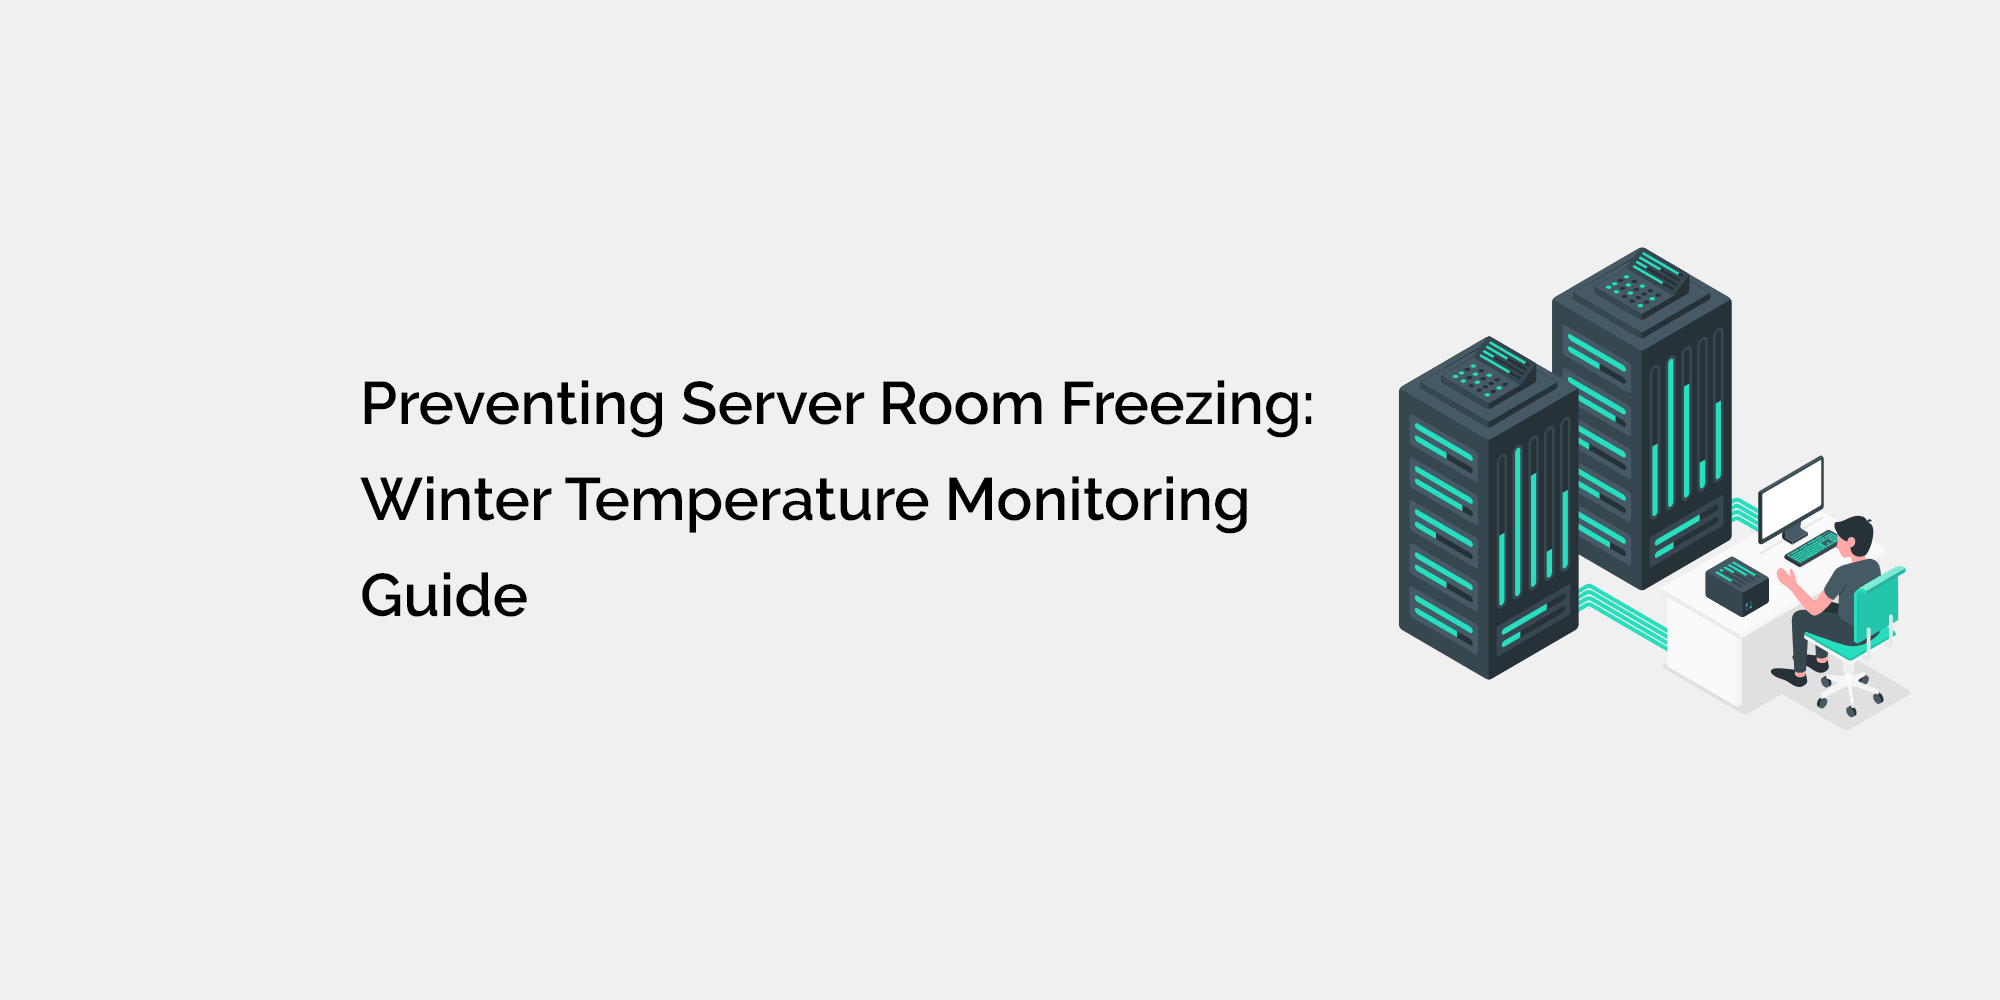 Preventing Server Room Freezing: Winter Temperature Monitoring Guide